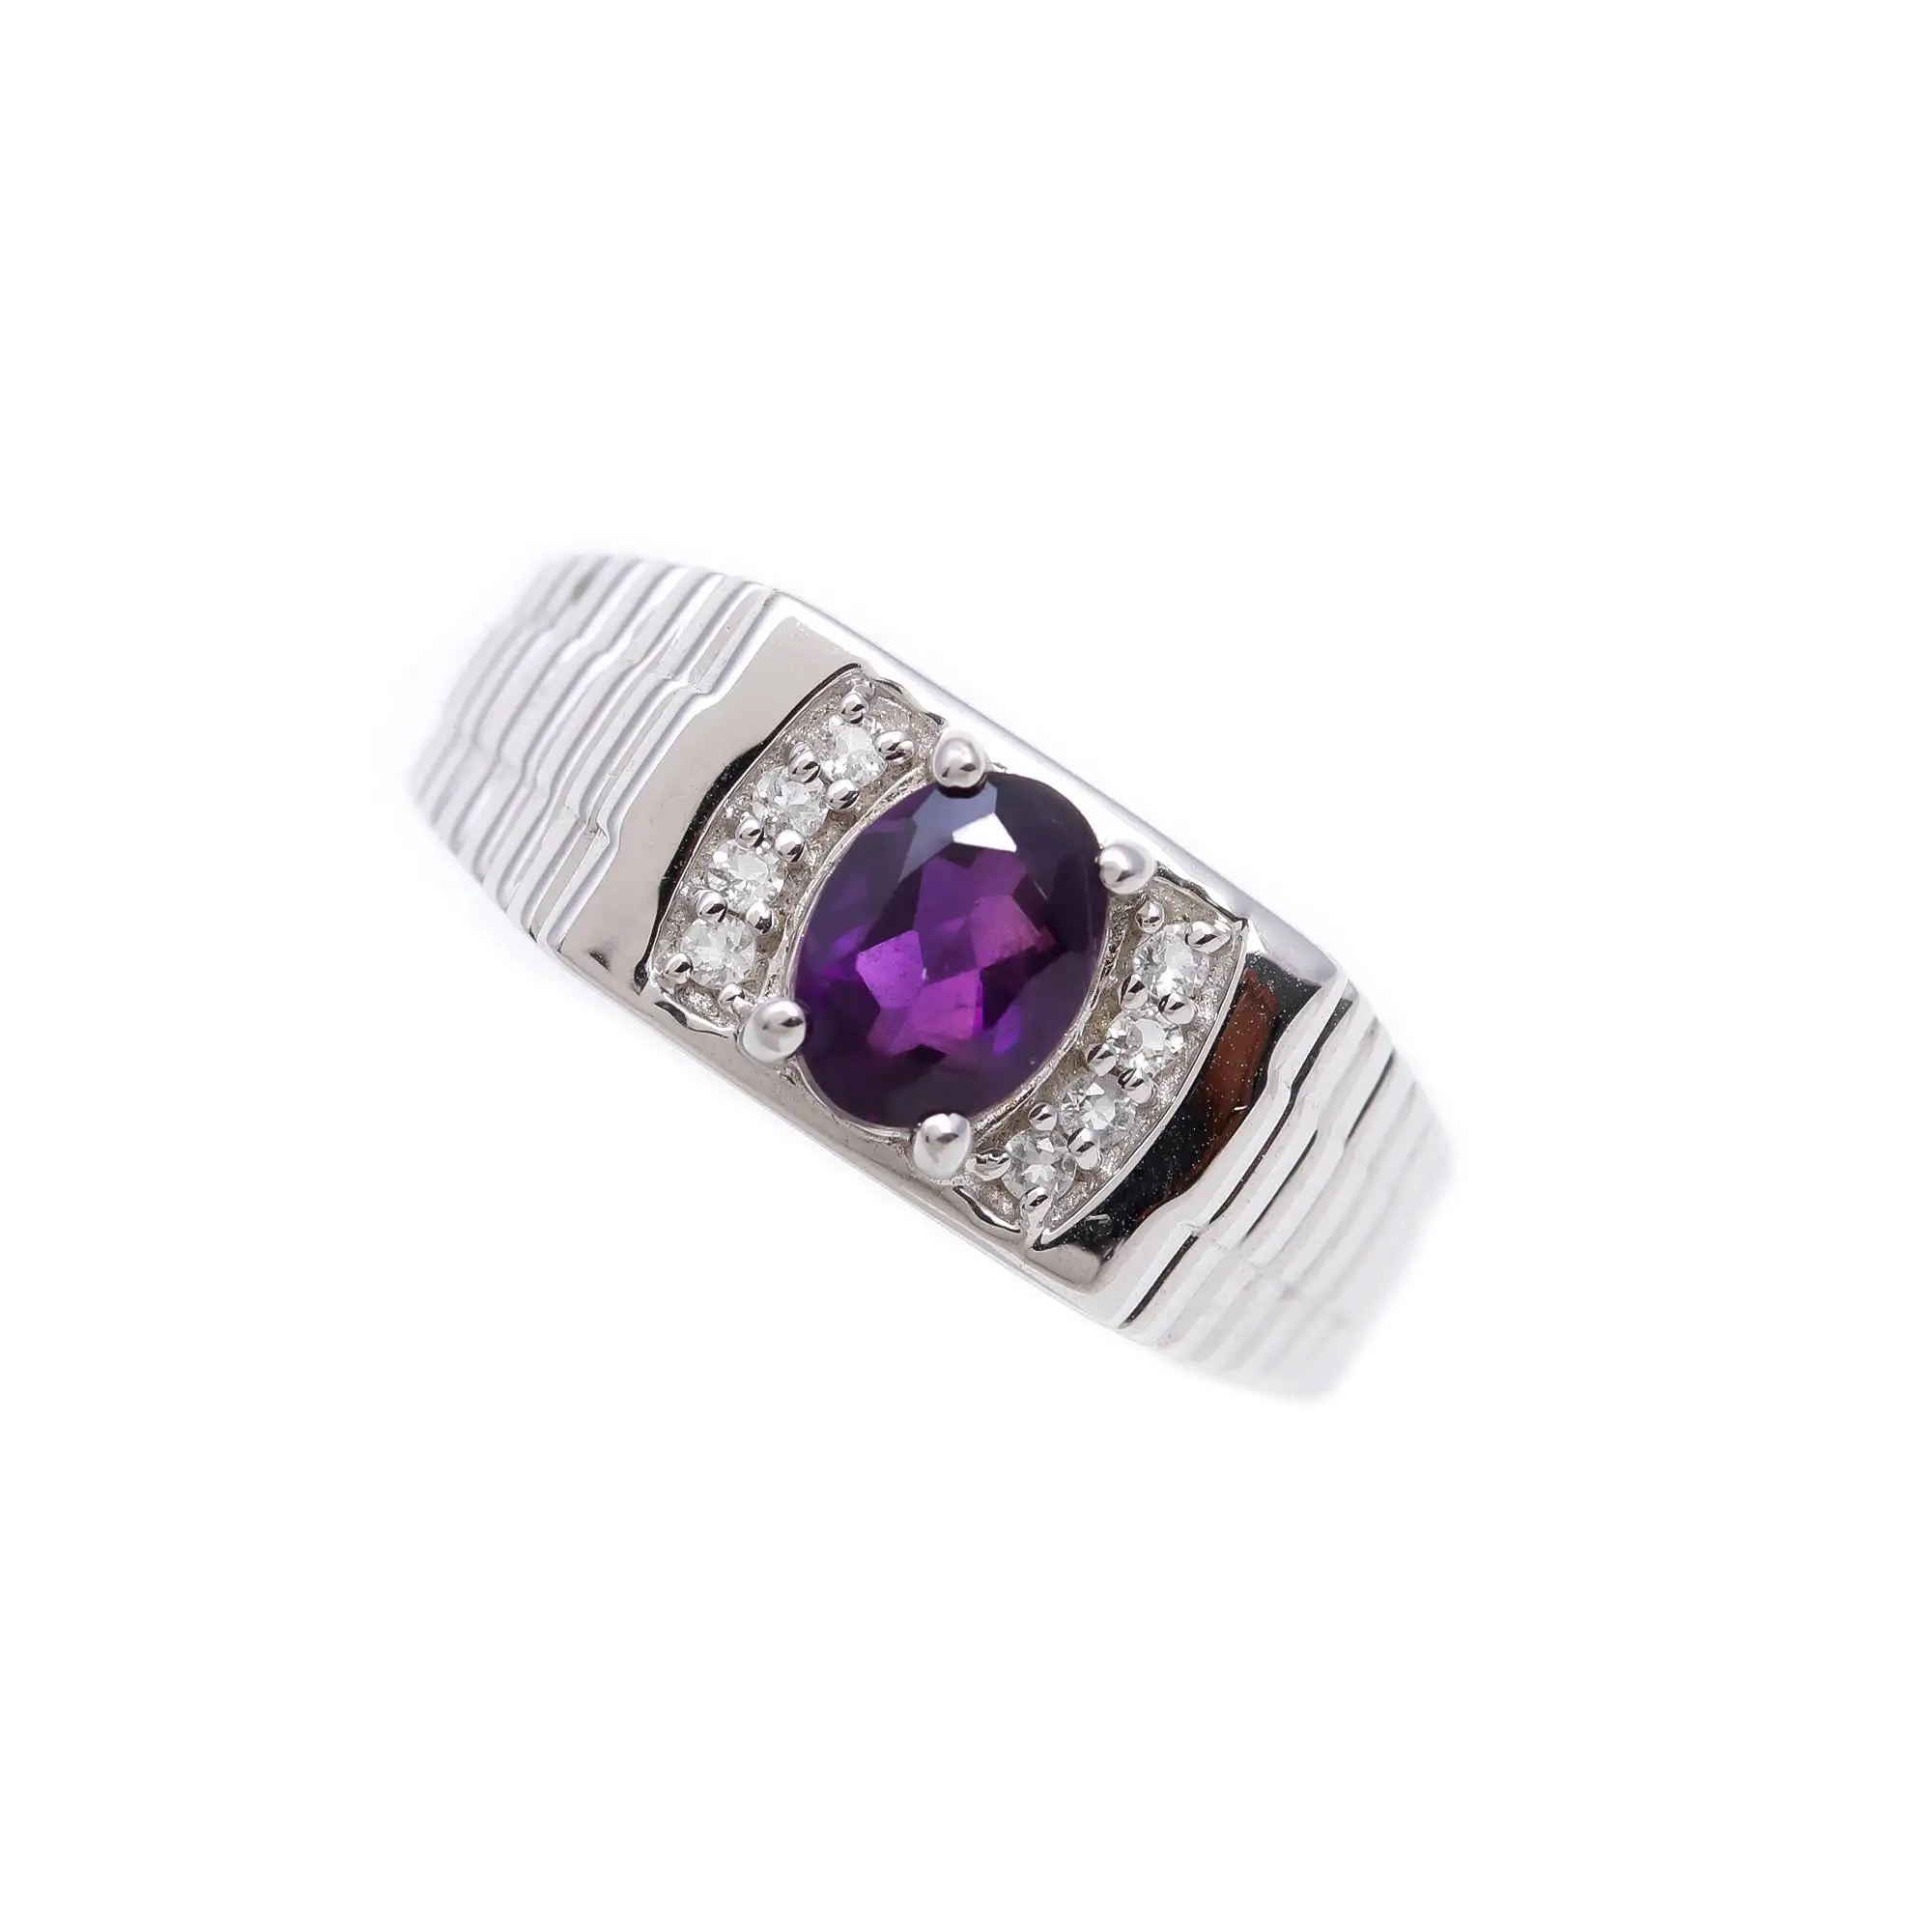 Indian Wholesaler Men's Fine Jewelry Ring Wedding Ring 925 Sterling Silver Amethyst Gemstone Finger Band Ring For Men